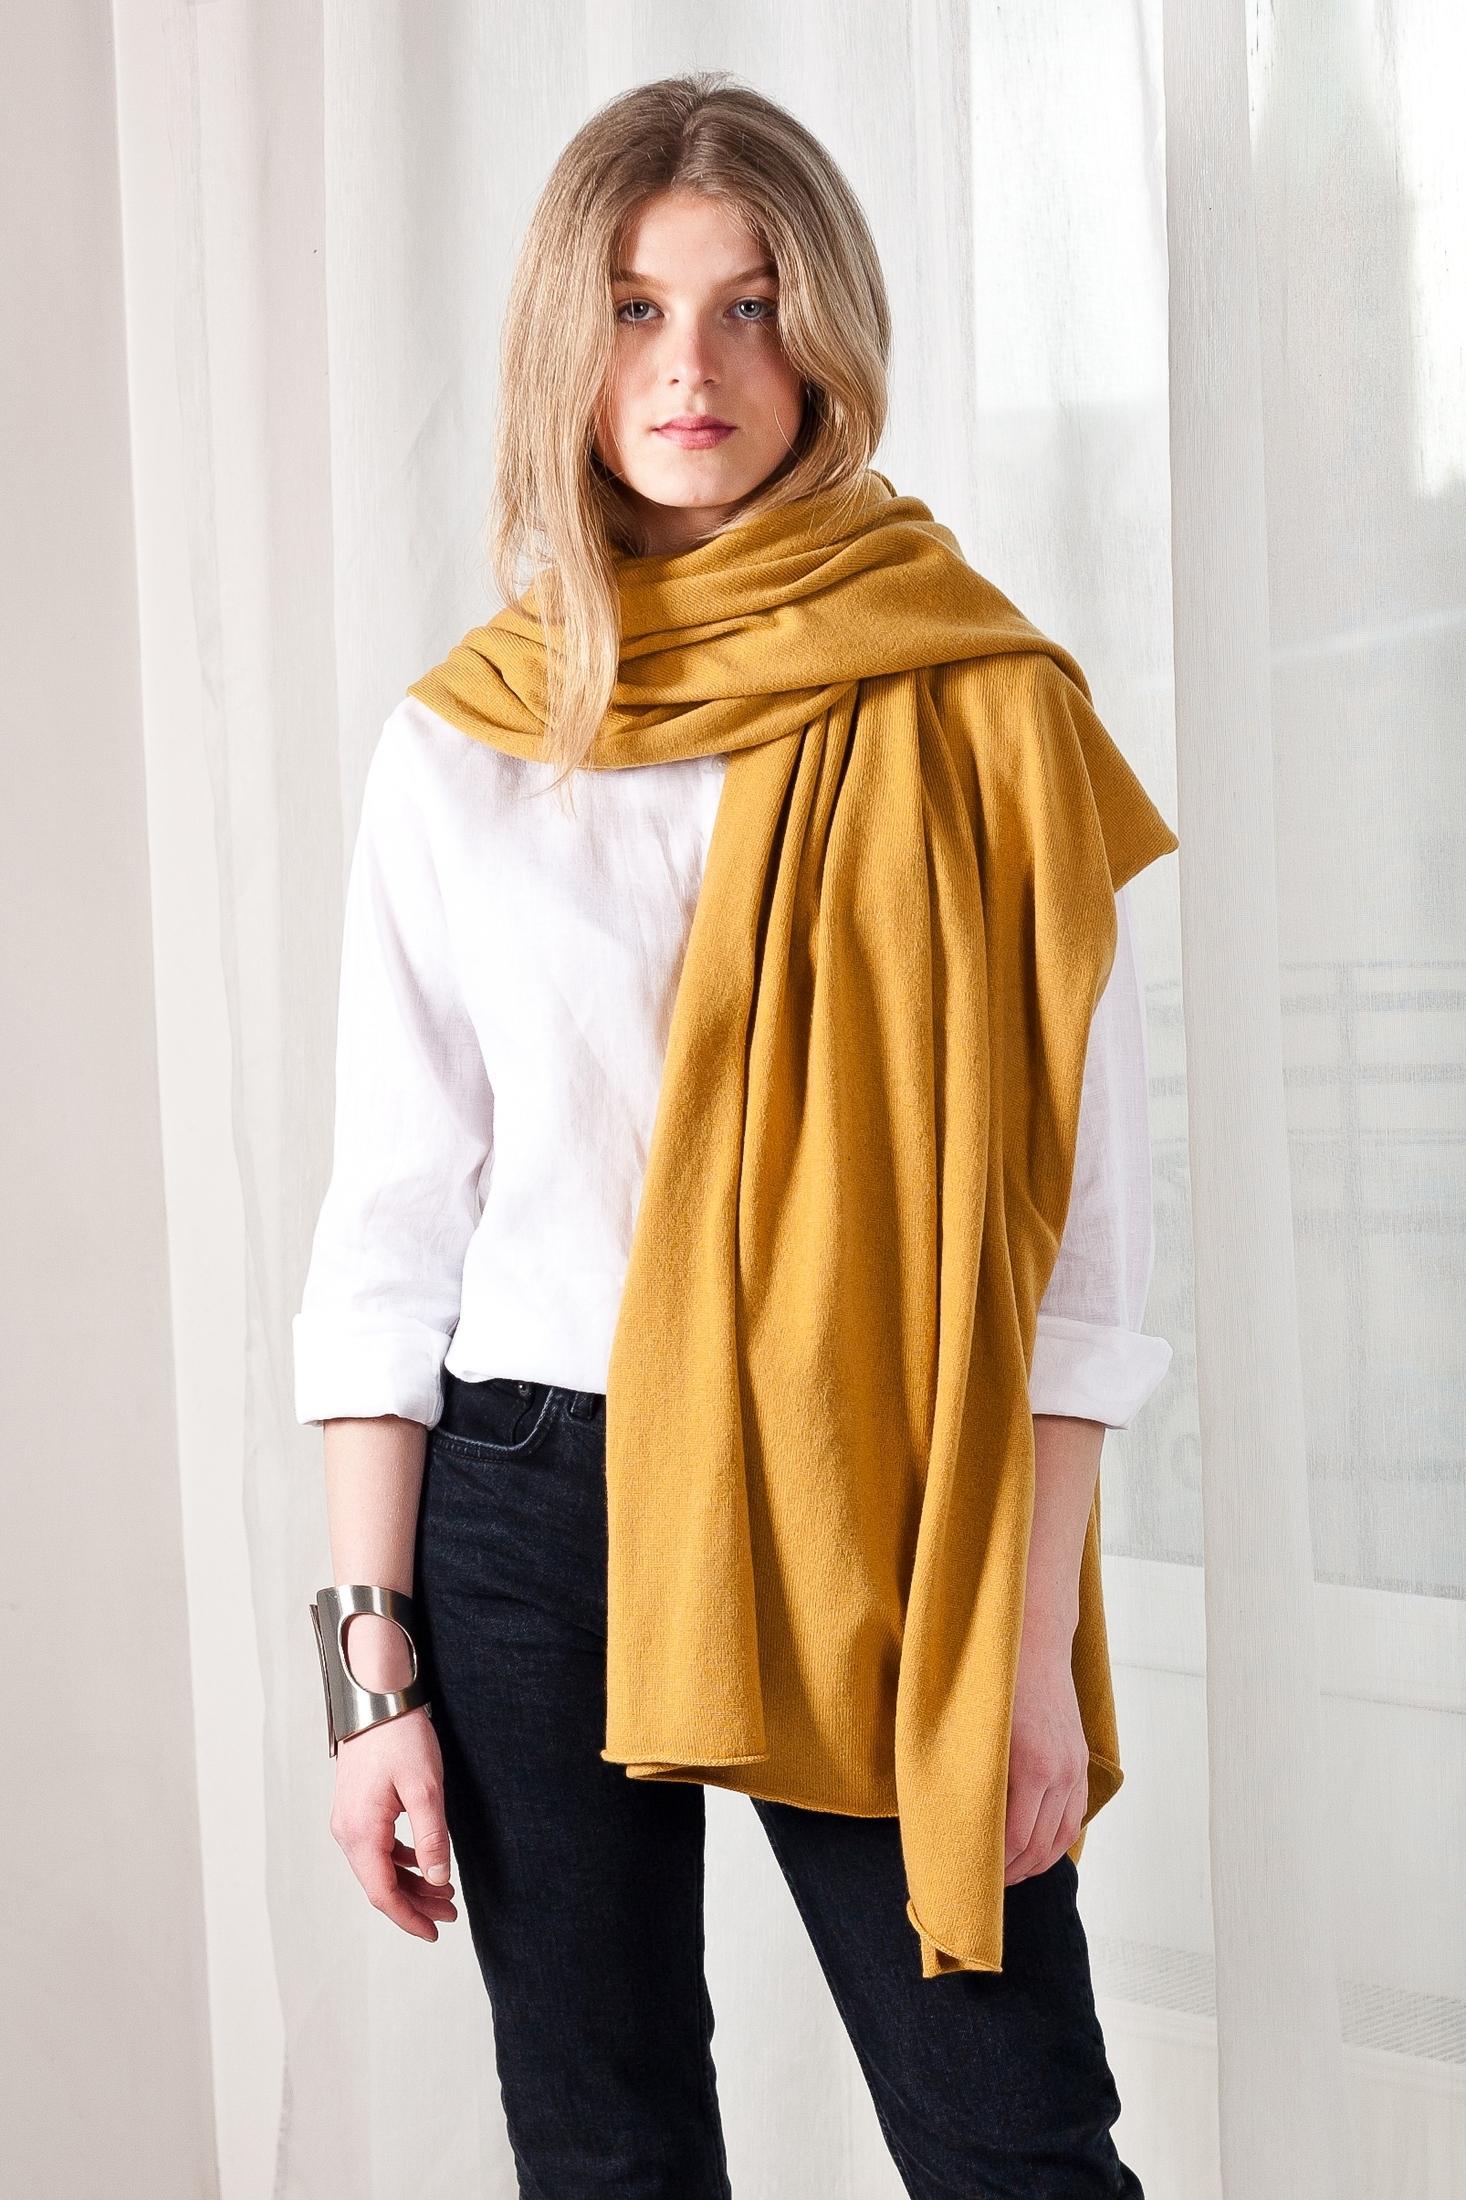 100% cashmere mustard yellow scarf travel wrap